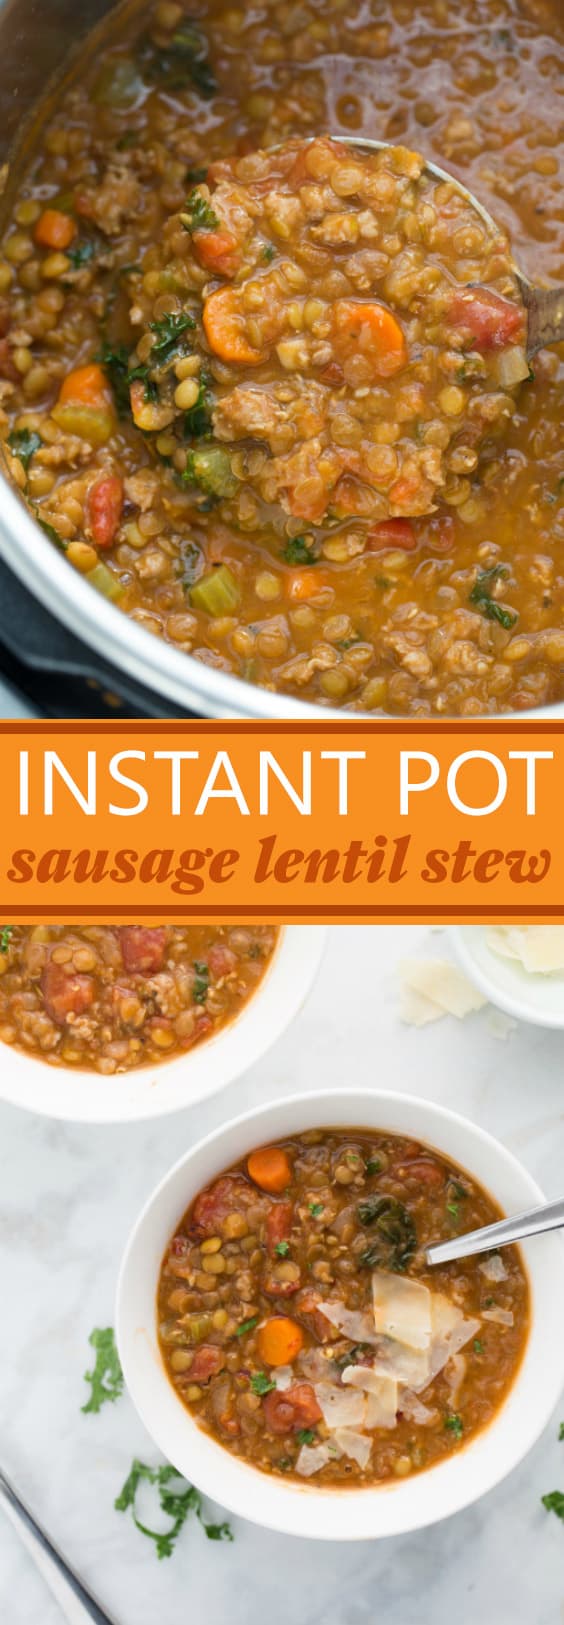 Instant Pot Sausage Lentil Stew! #instantpot #instantpotrecipes #setitandforgetit #easydinner #glutenfreedinner #lentilstew